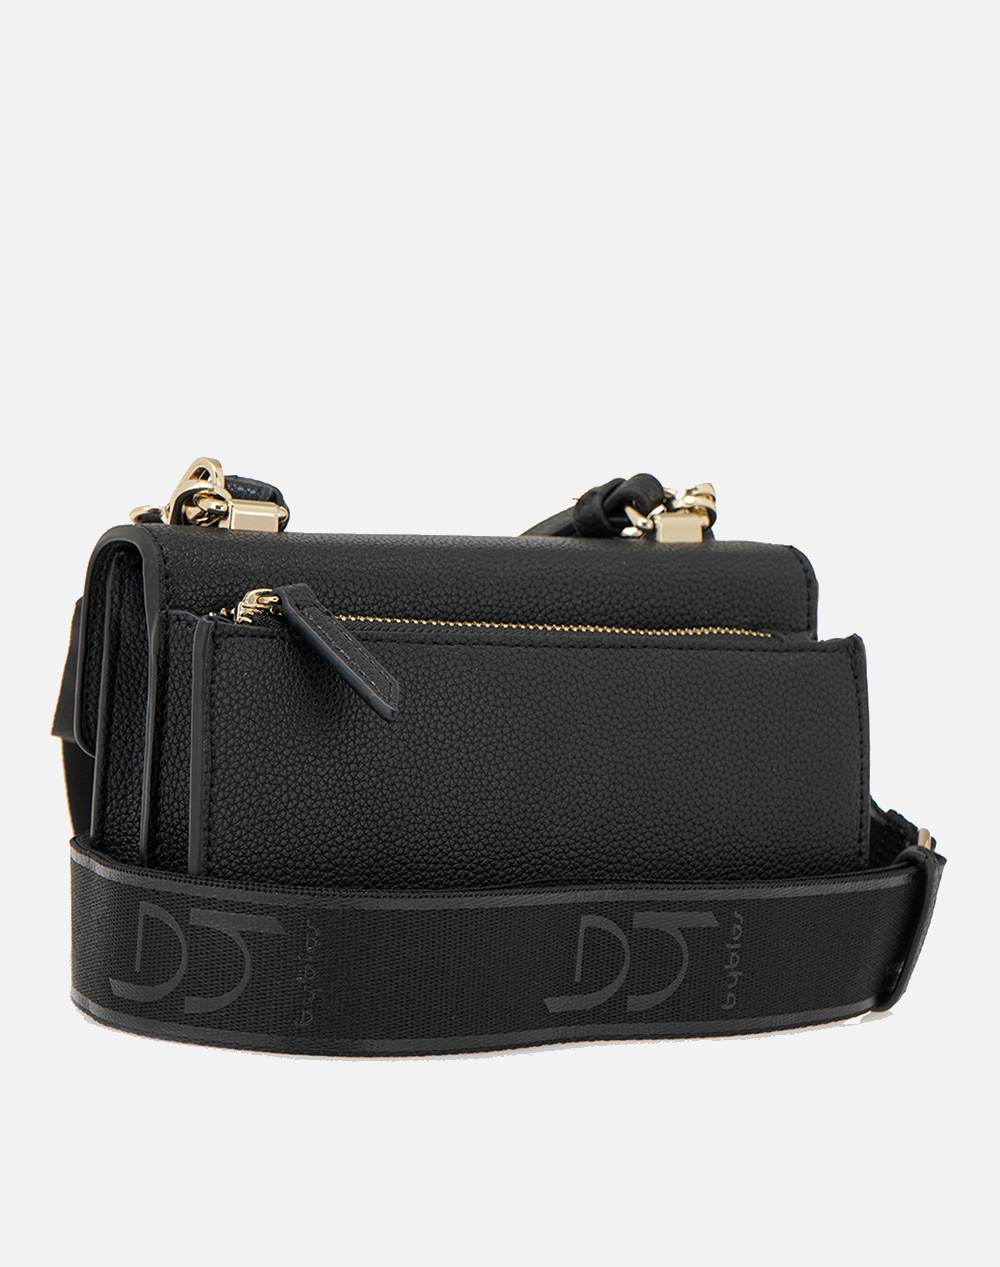 BYBLOS Handbags (Dimensions: 19 x 12 x 6.5 cm)